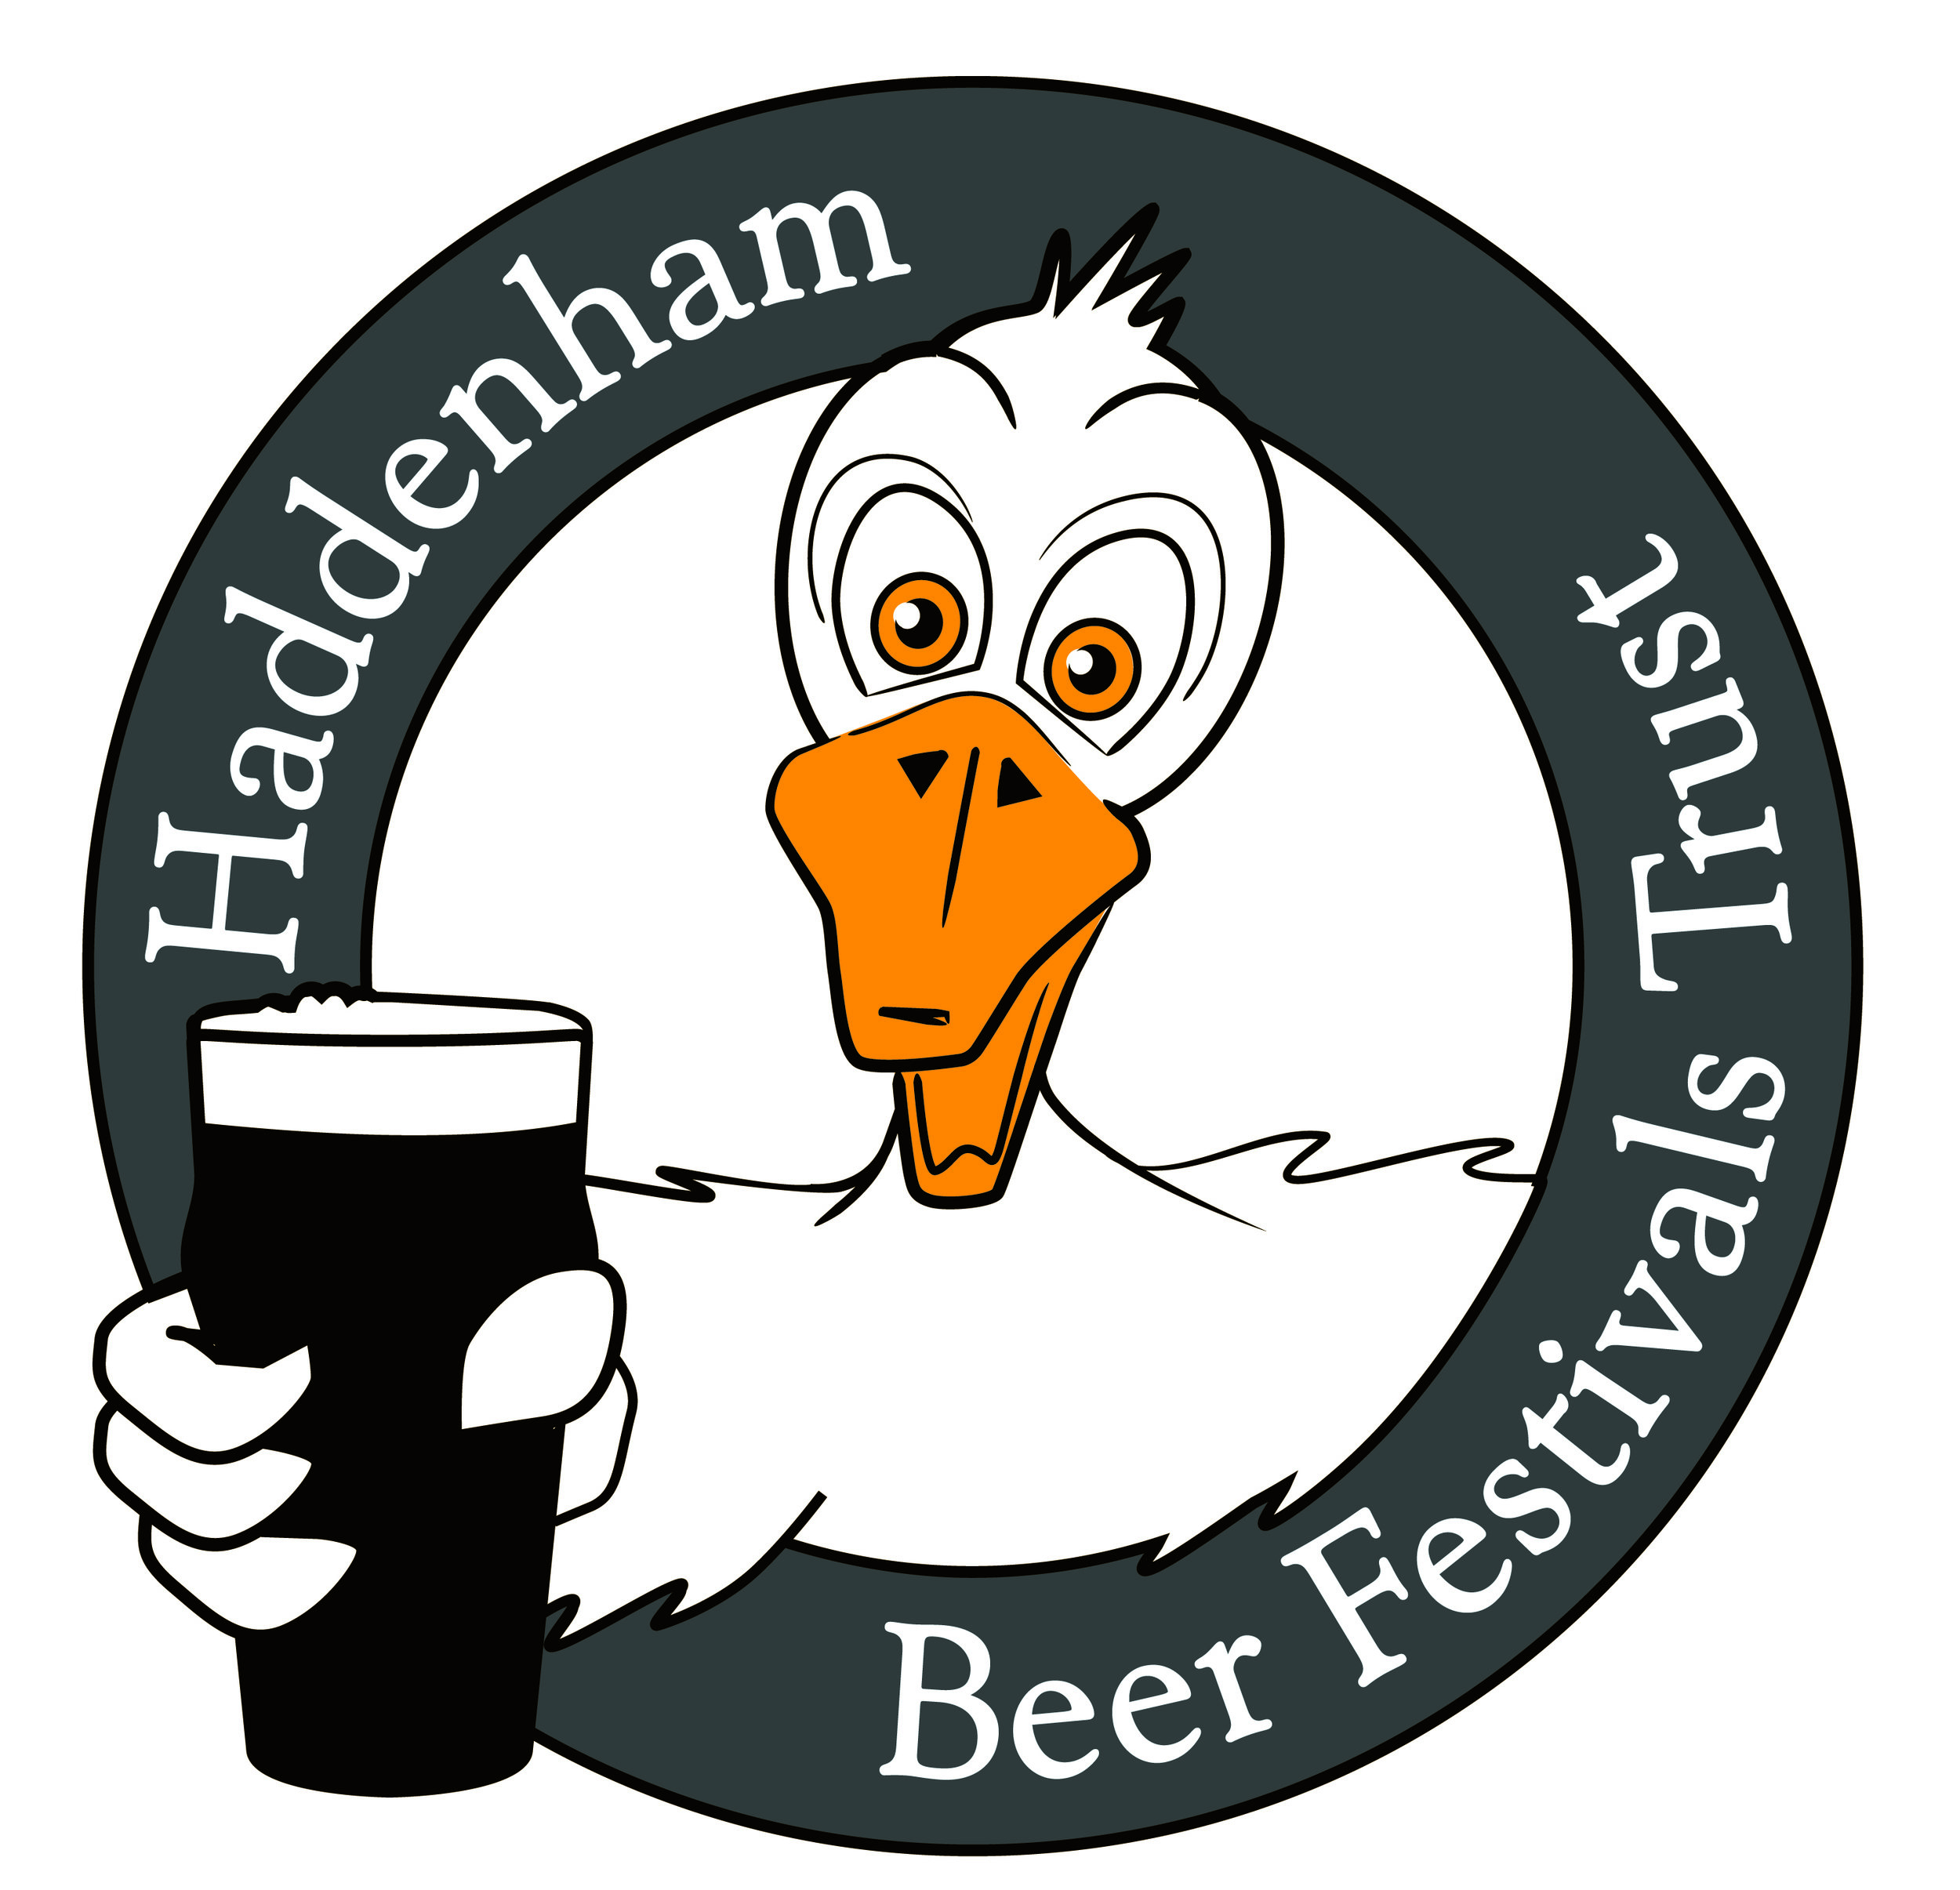 Haddenham Beer Festivals Trust